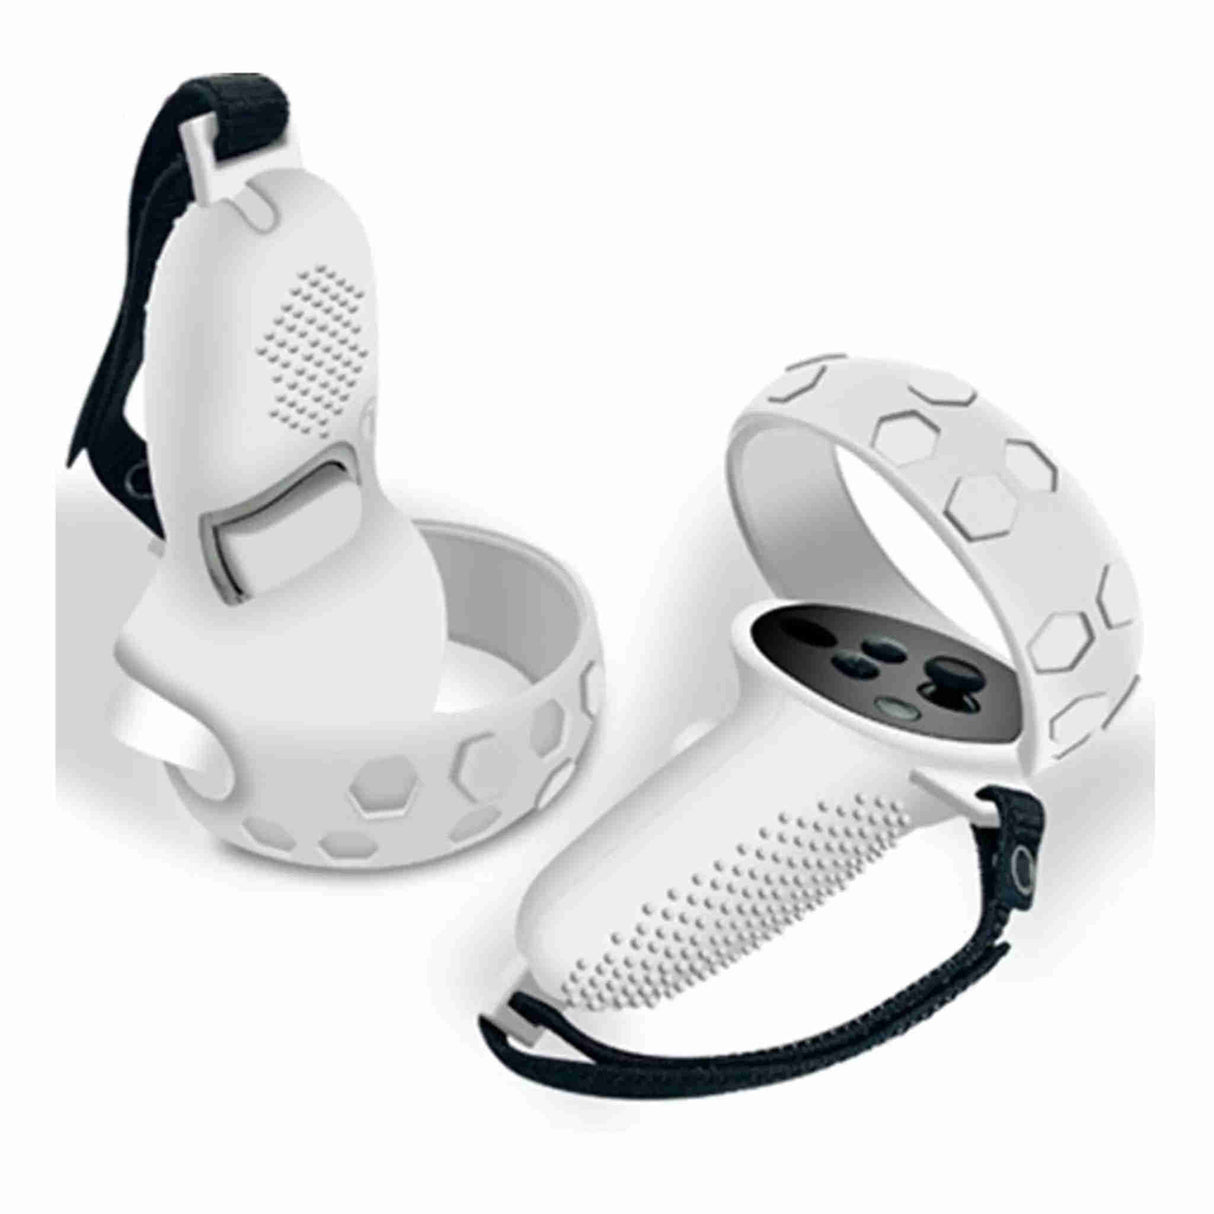 Gamax Oculus quest 2 silicone grip inclusive case- White